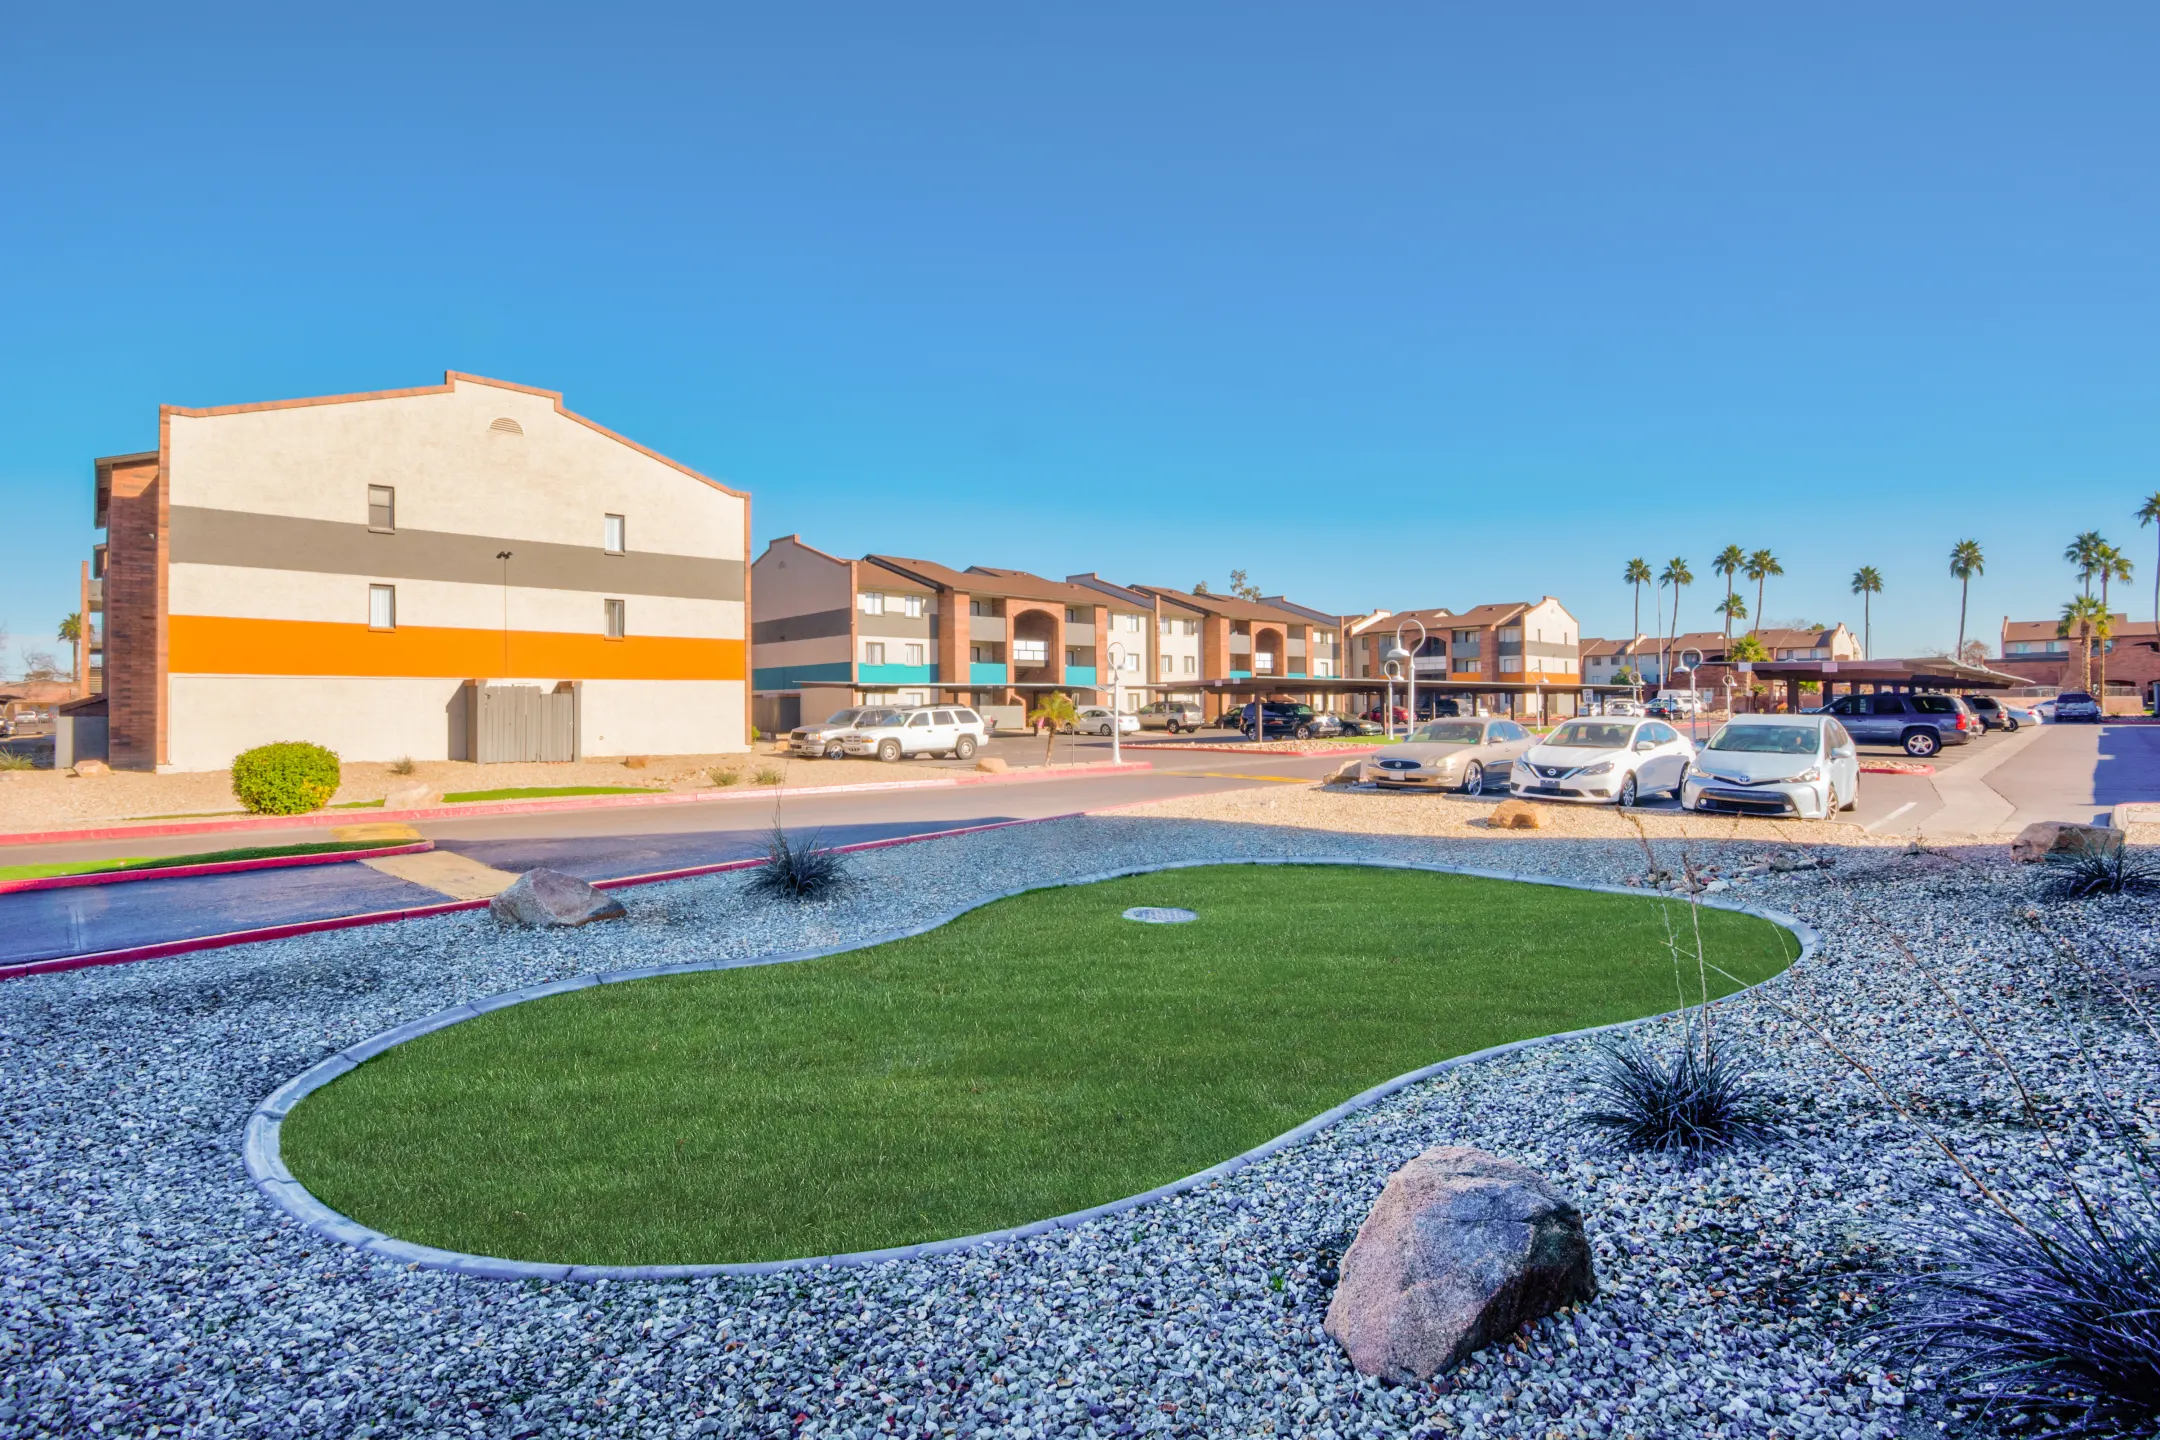 Building - The Resort on 27th Ave - Phoenix, AZ